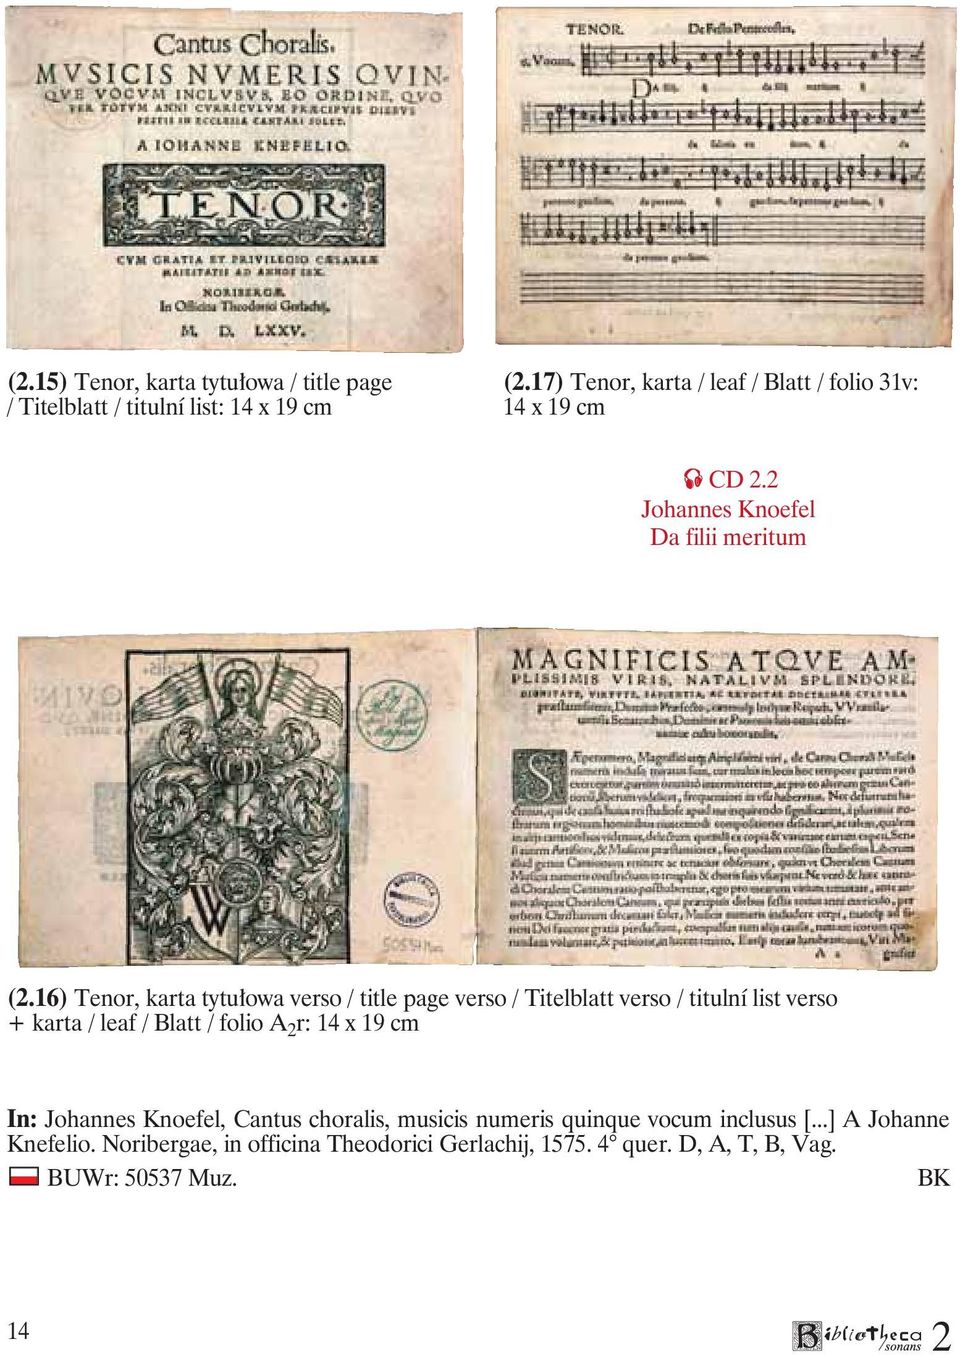 16) Tenor, karta tytułowa verso / title page verso / Titelblatt verso / titulní list verso + karta / leaf / Blatt / folio A r: 14